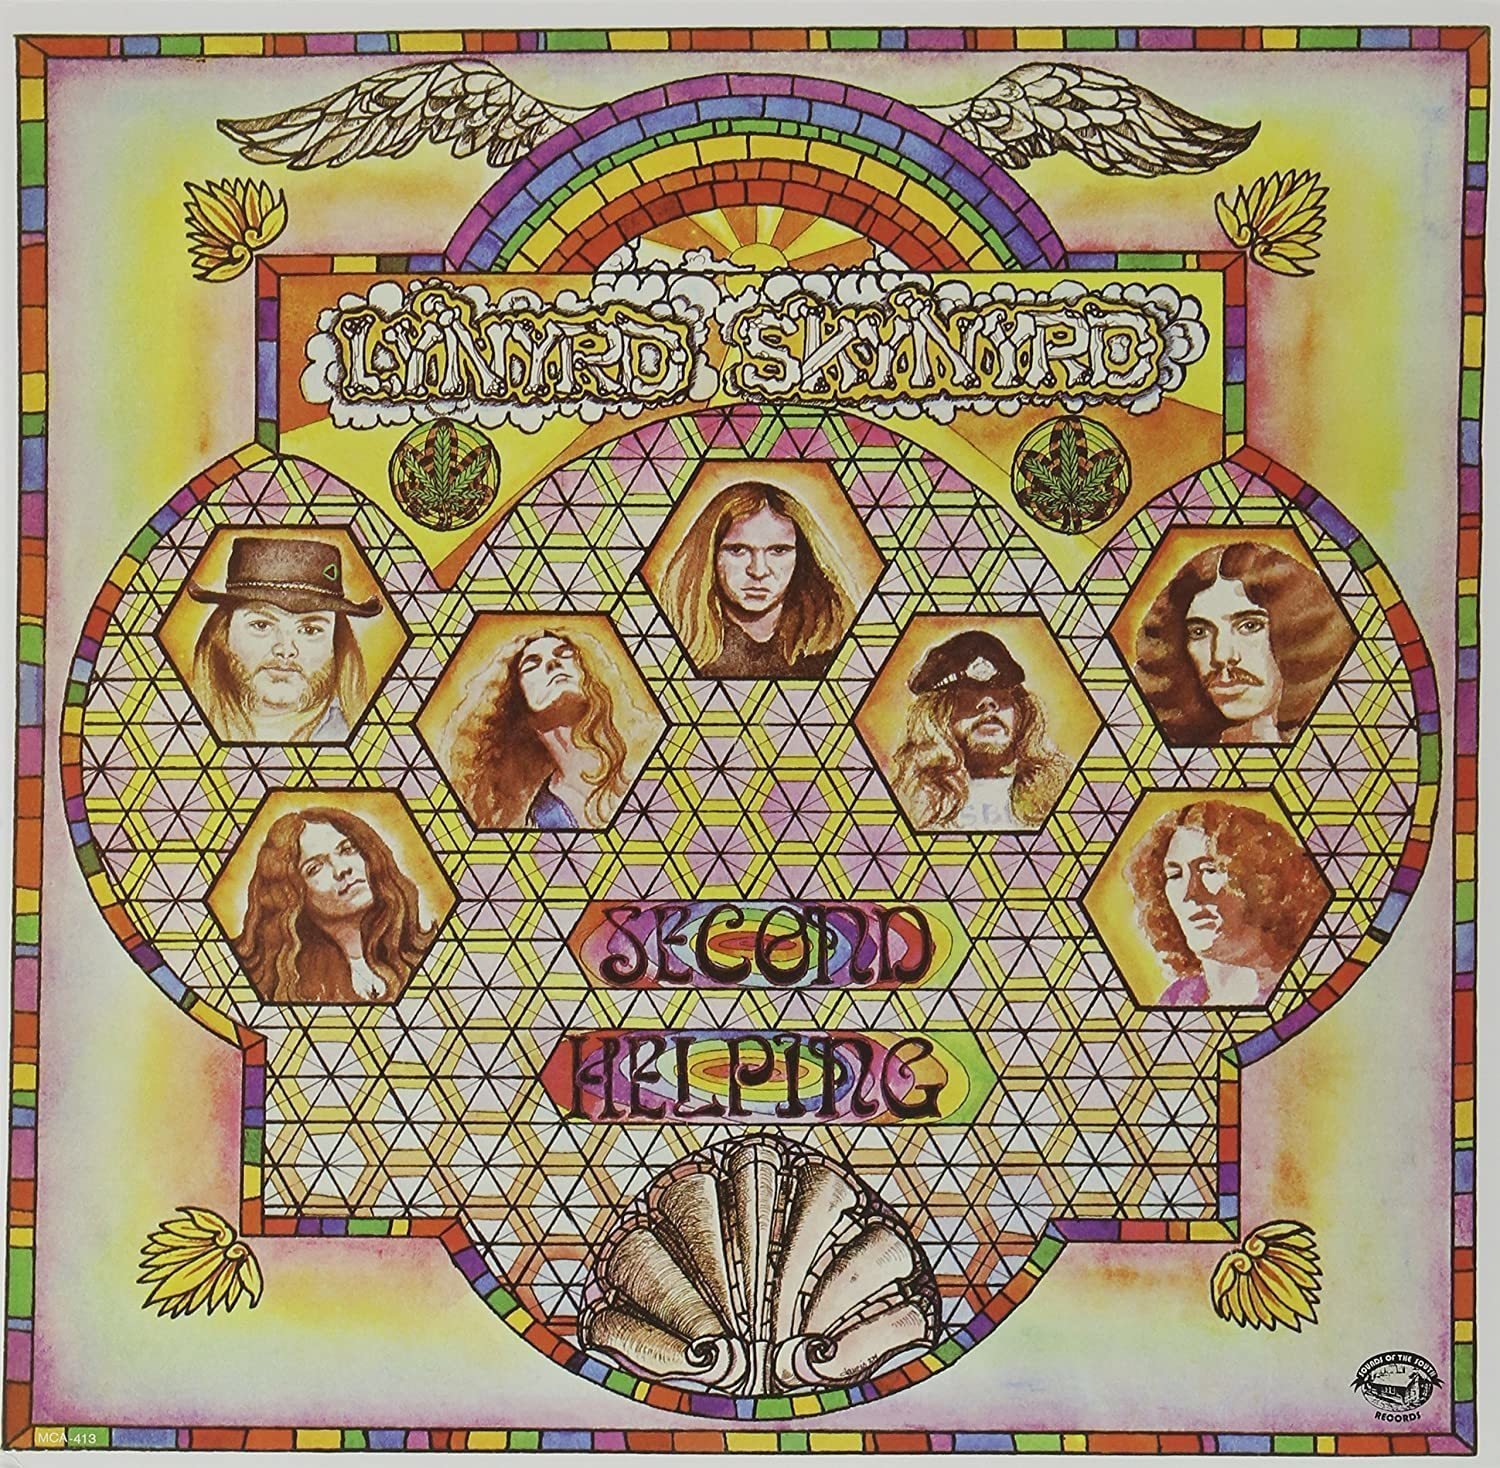 Vinyl Record Lynyrd Skynyrd - Second Helping (200g (LP)